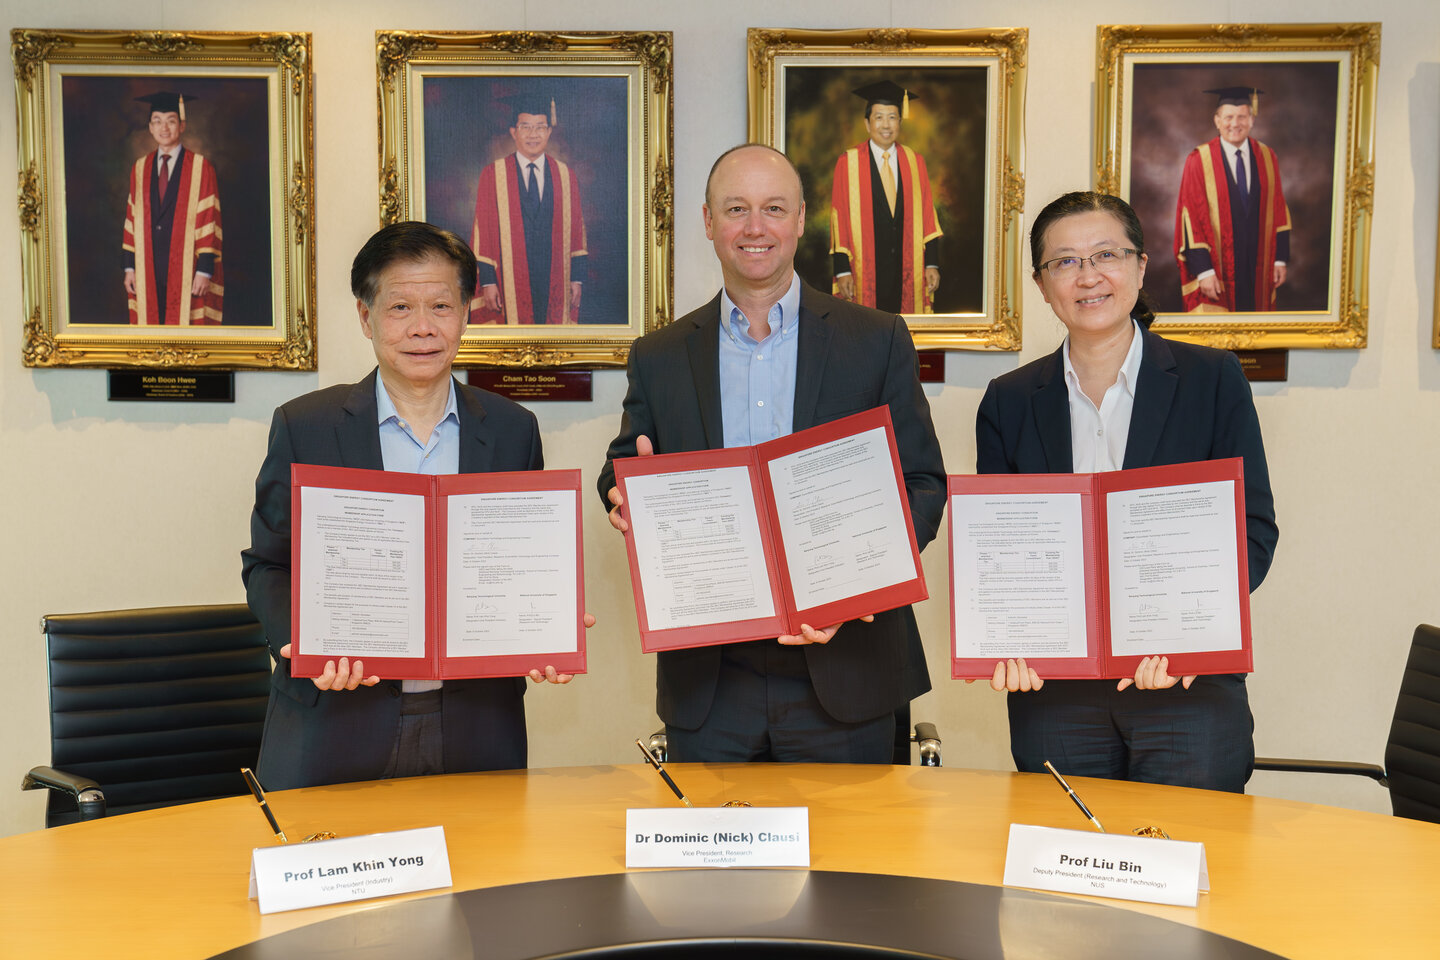 Prof Lam Khin Yong, Dr Dominic Clausi and Prof Liu Bin holding agreements